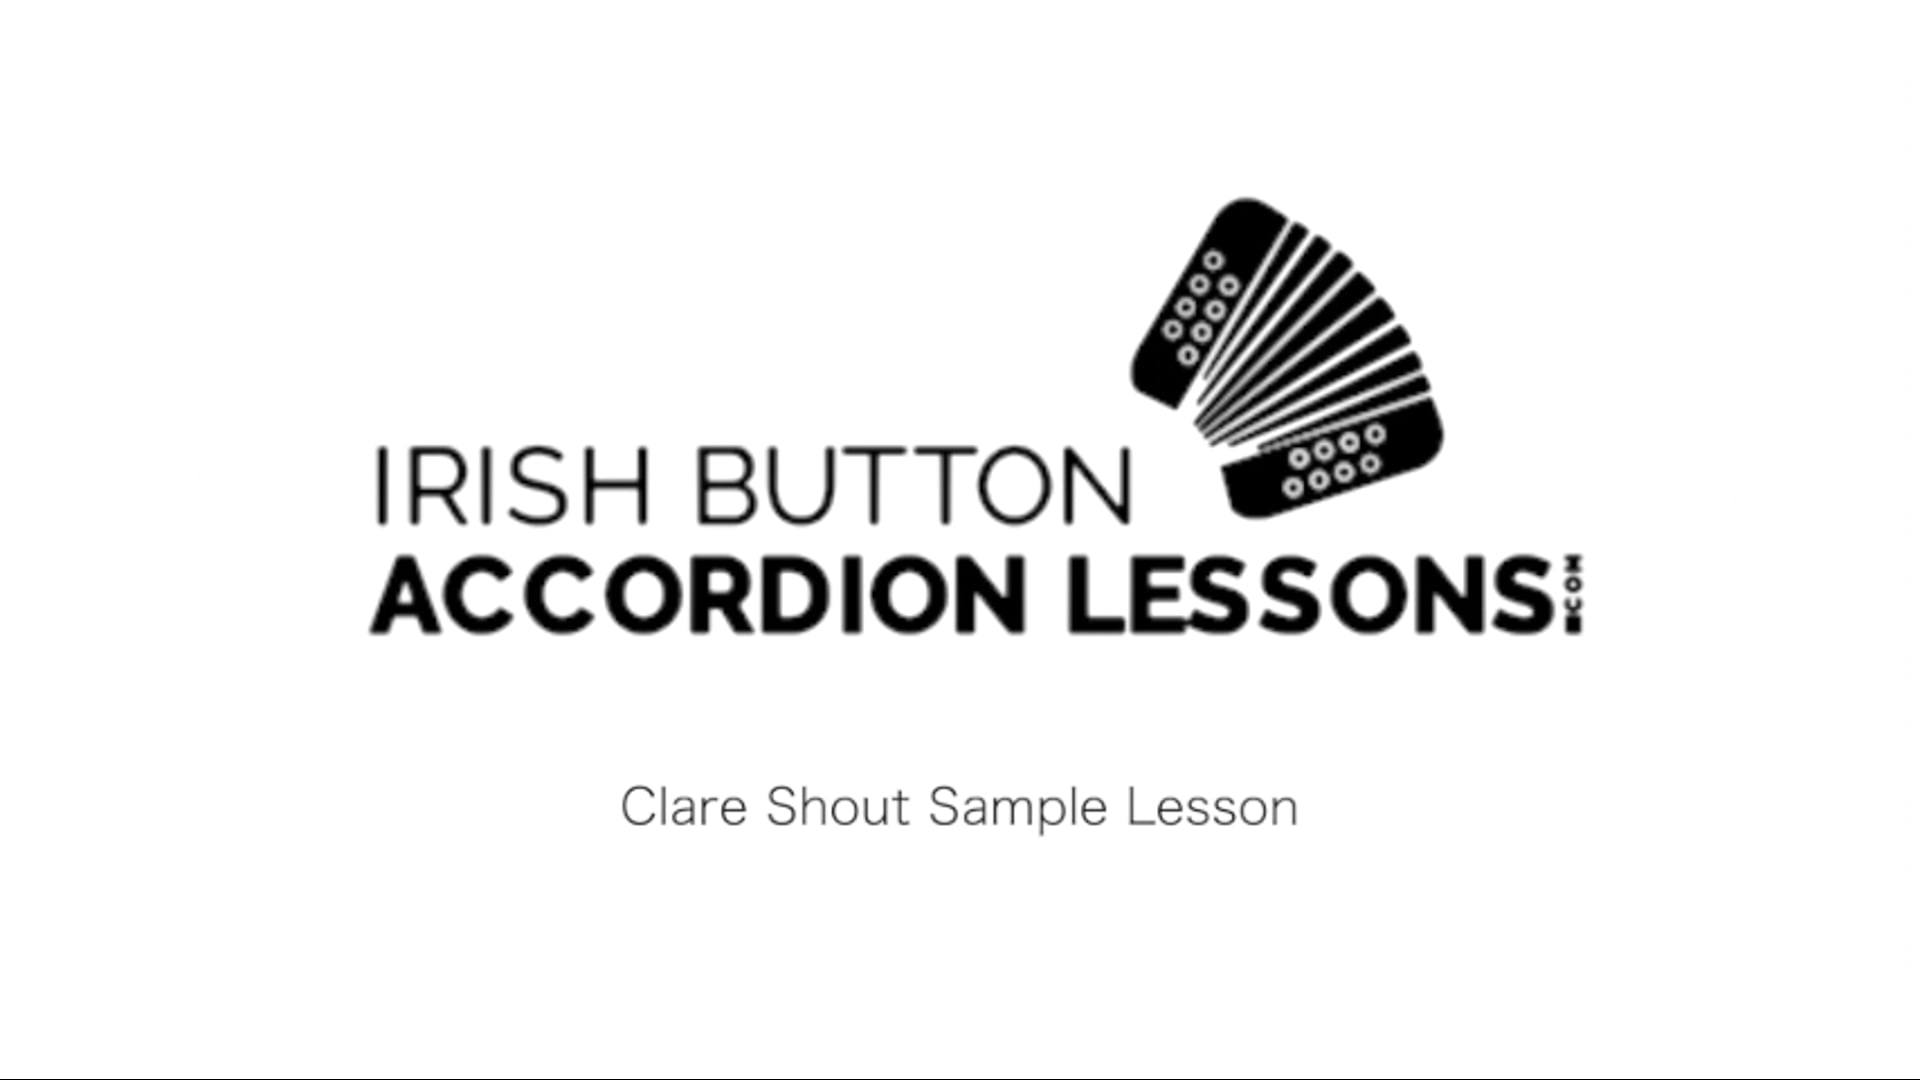 Clare Shout Advanced Sample Lesson